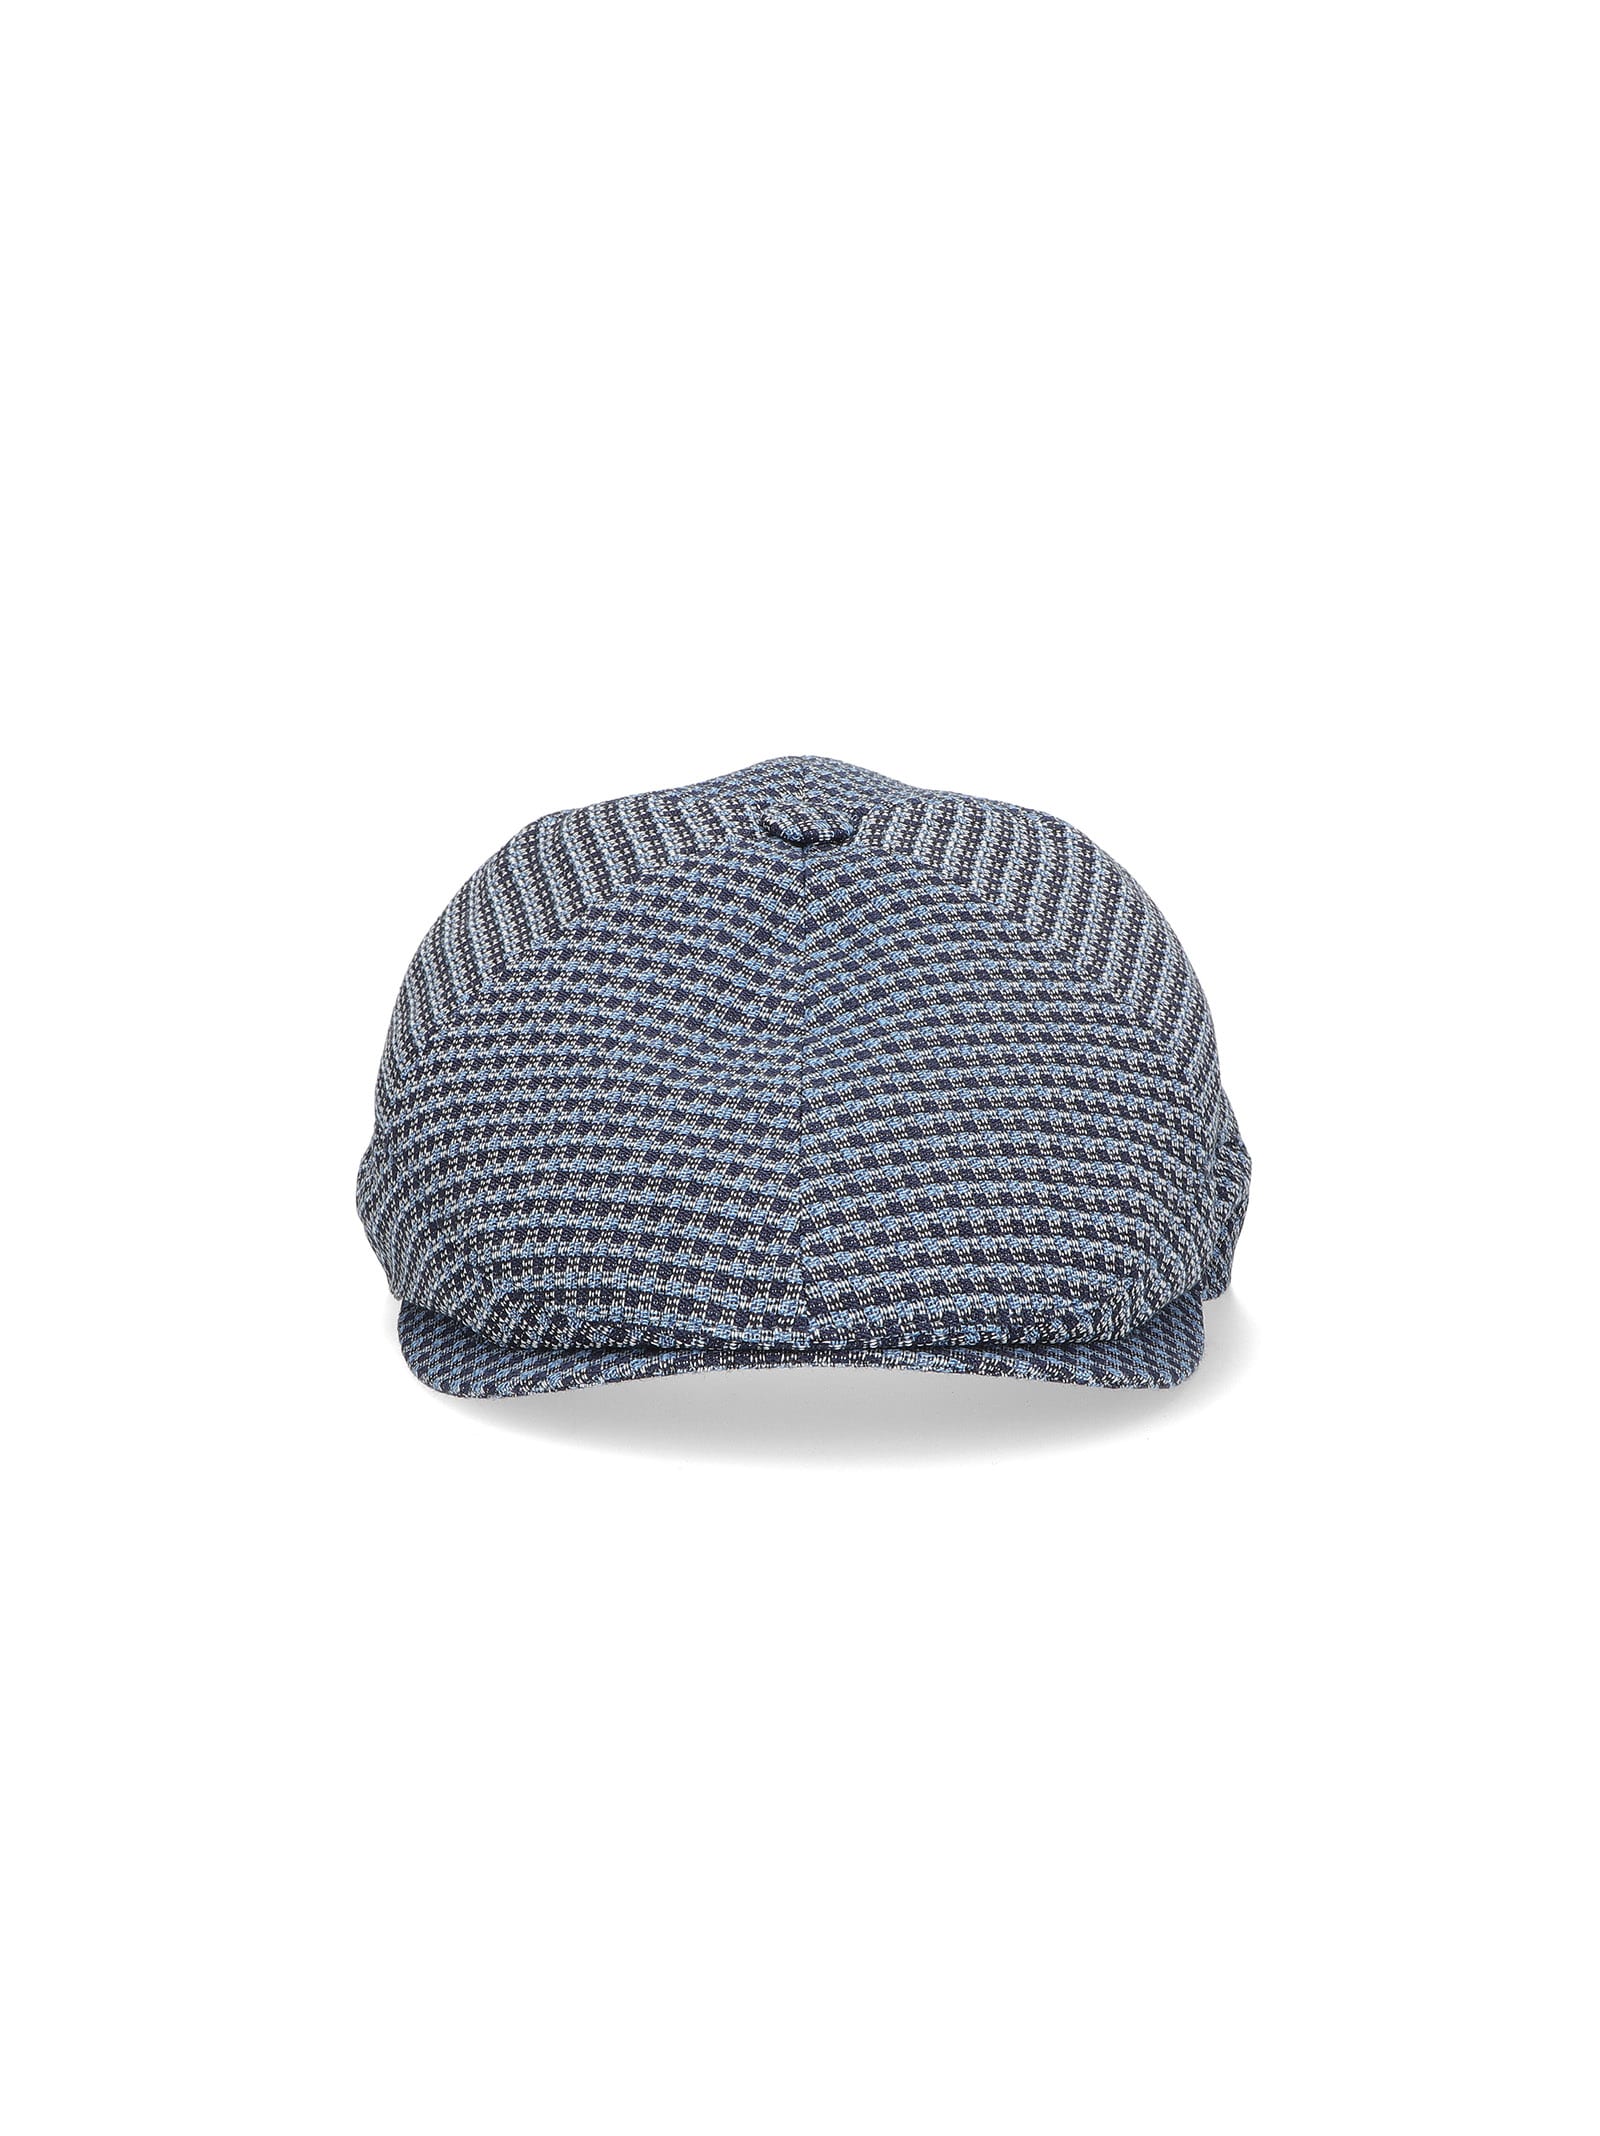 Borsalino Six Segments Bowler Hat In Micro-check Light Blue + Blue